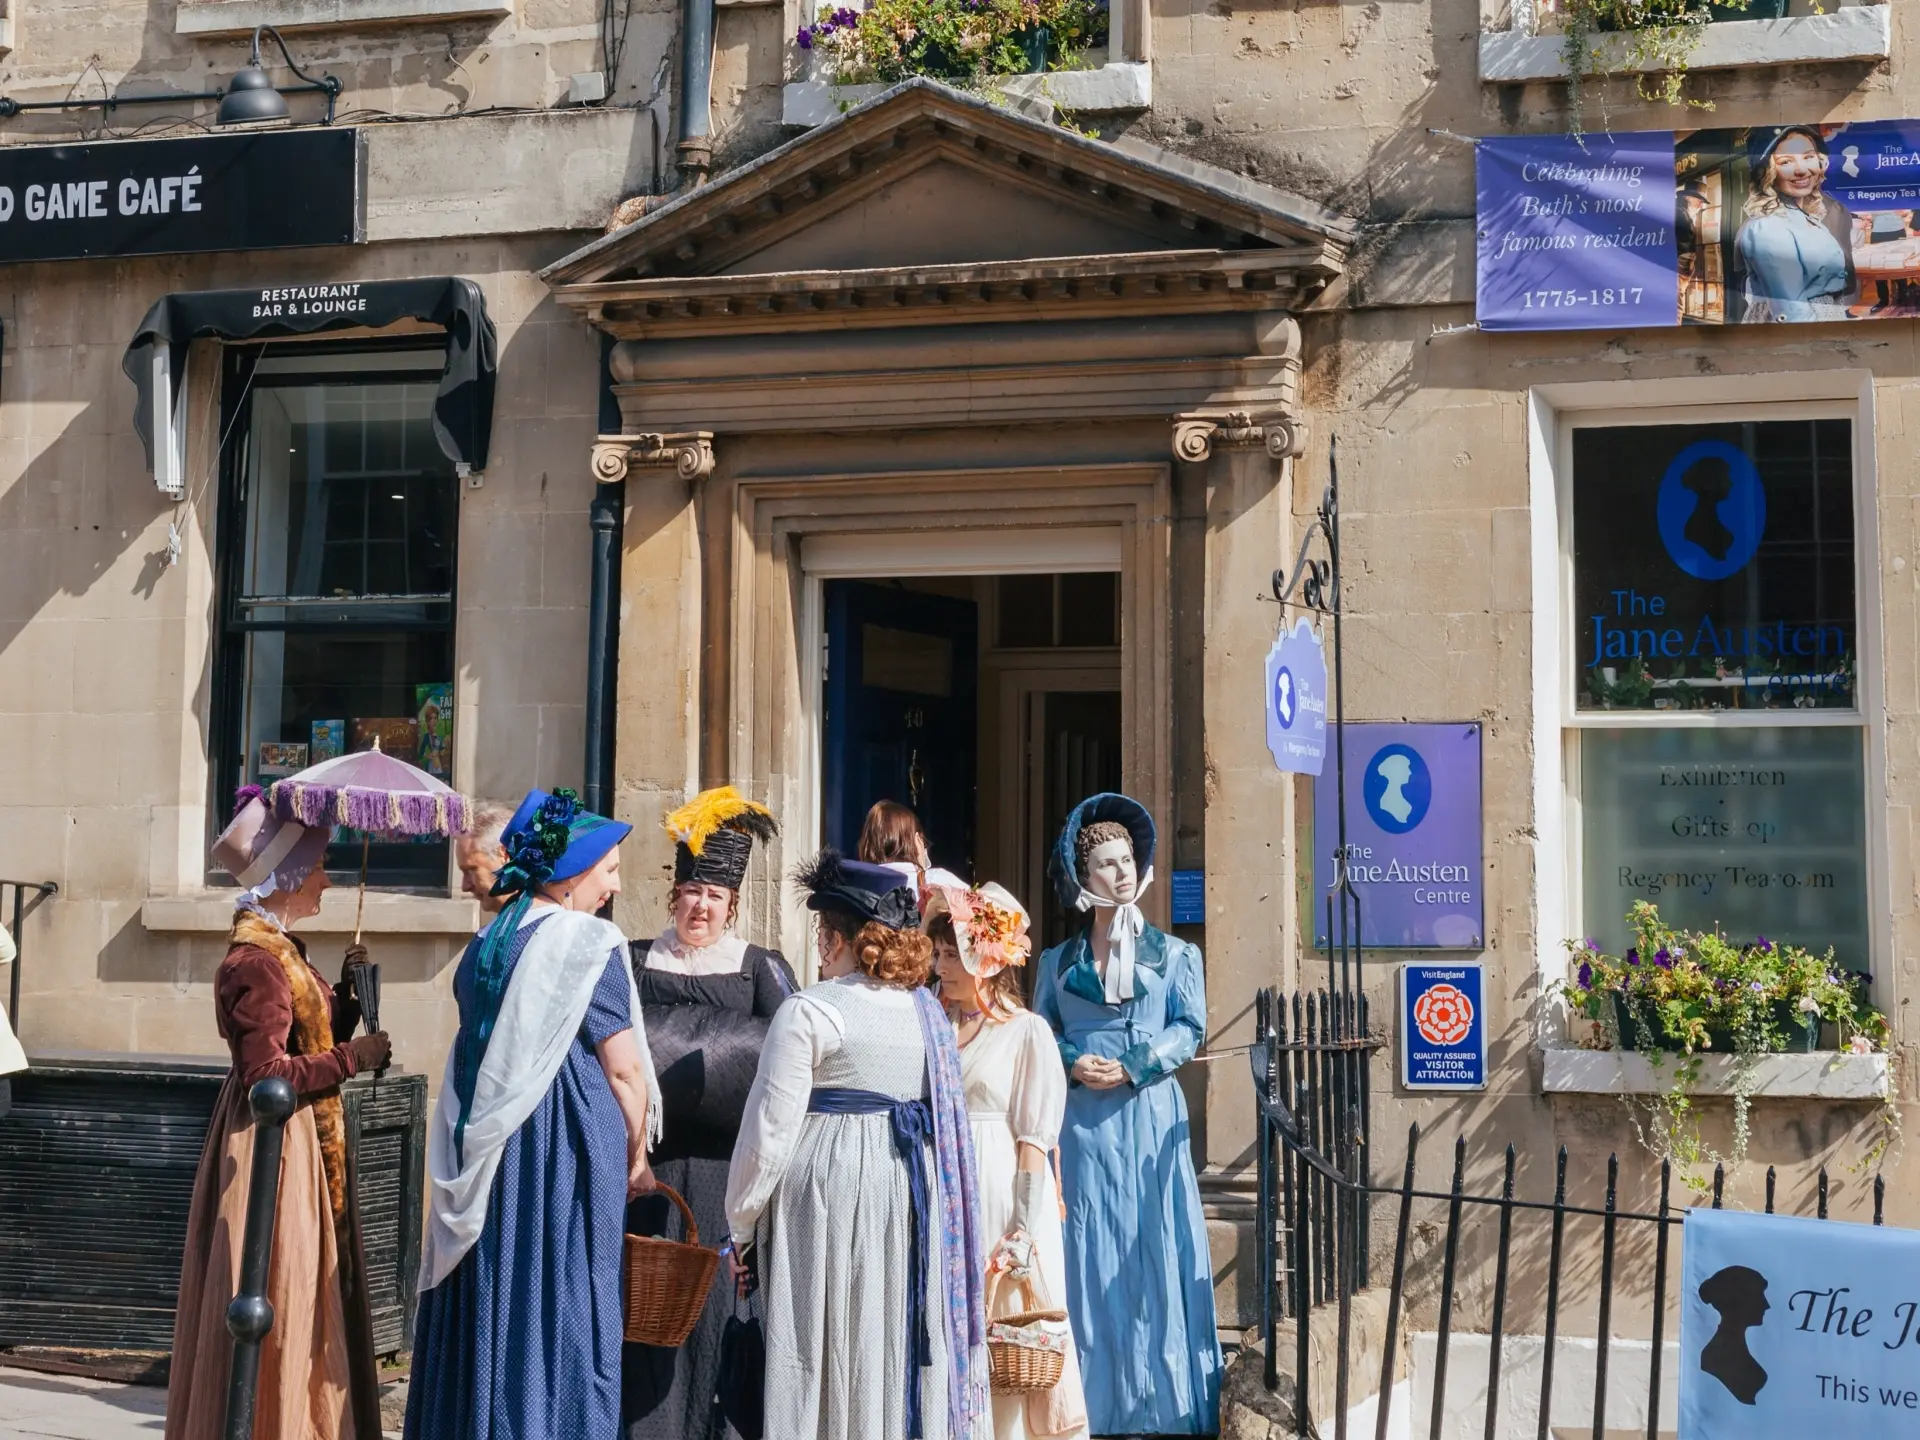 5 women in period dress clothing stood outside the Jane Austen centre in Bath.